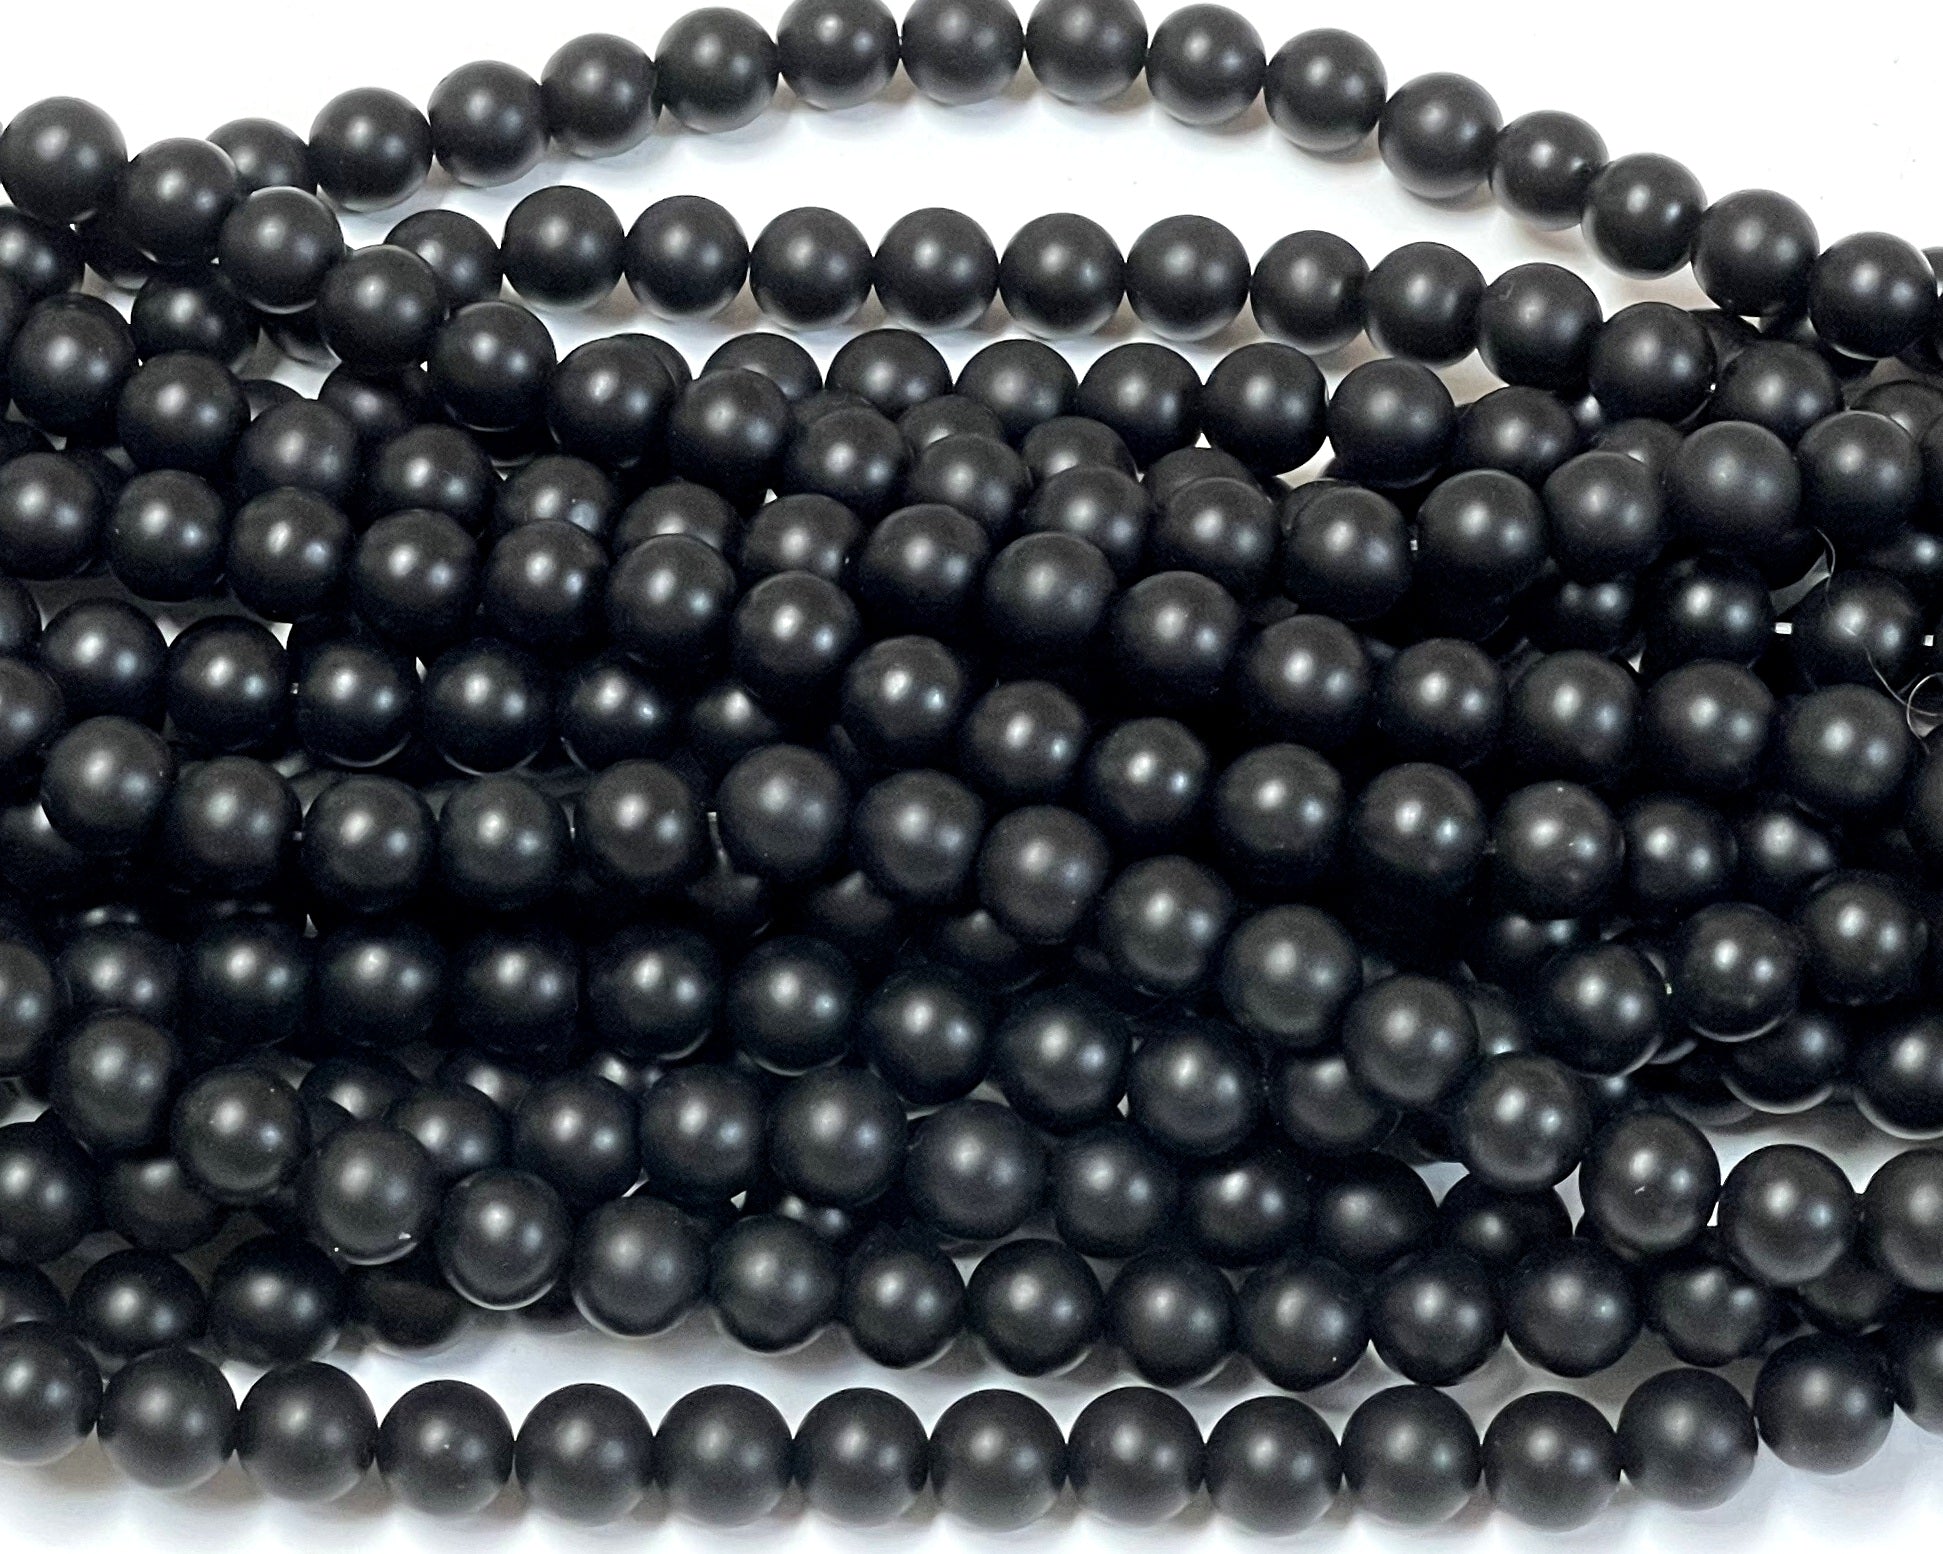 Black Onyx matte oiled 10mm round gemstone beads 15" strand